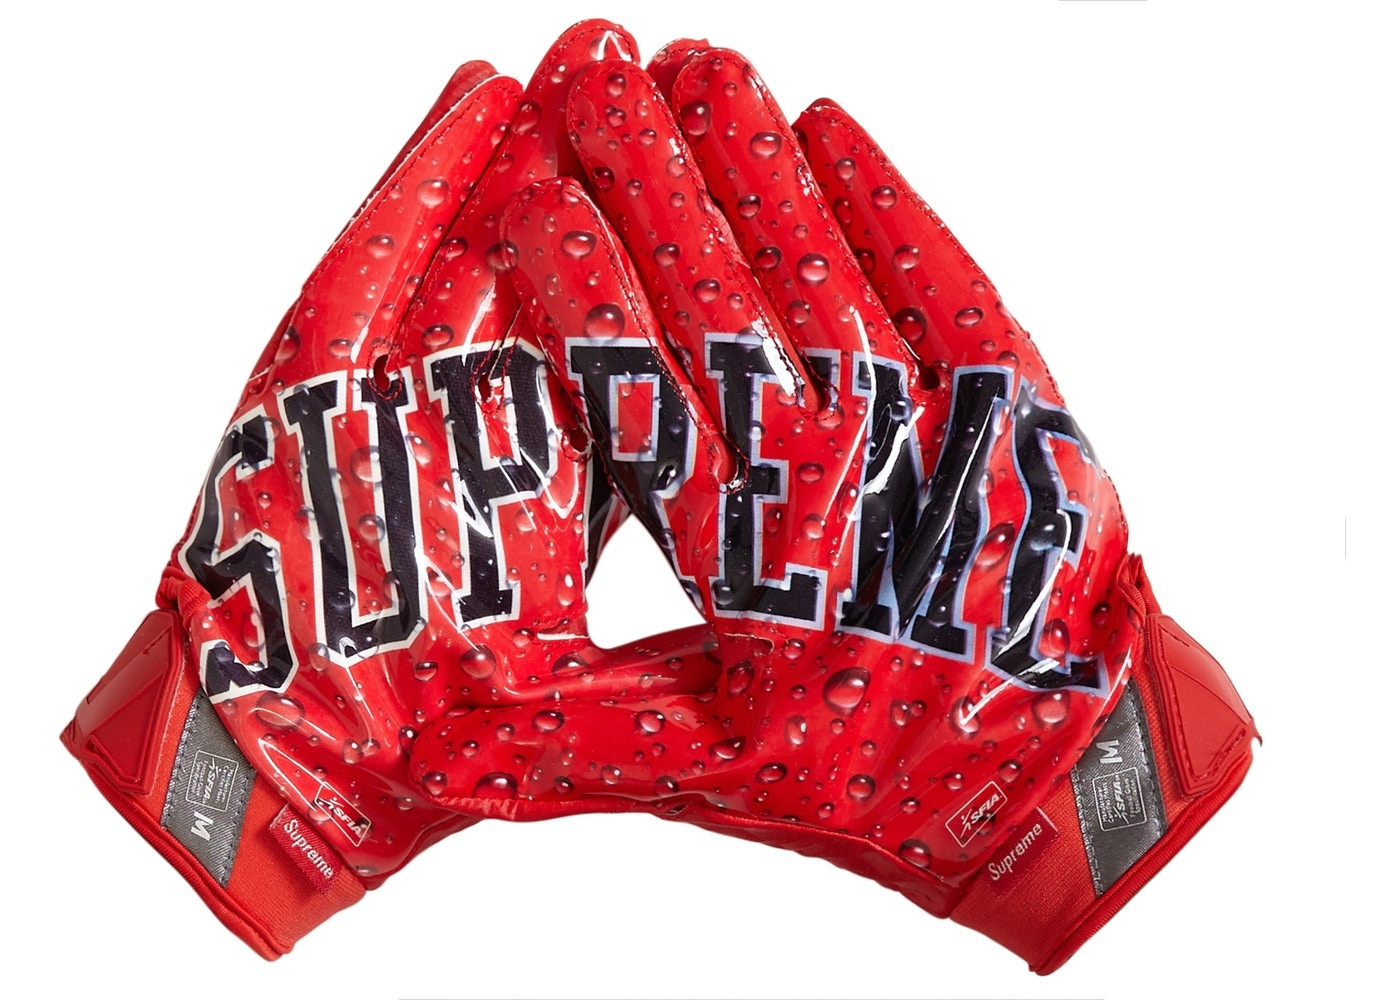 Supreme Supreme Nike Vapor Jet 4.0 Football Gloves